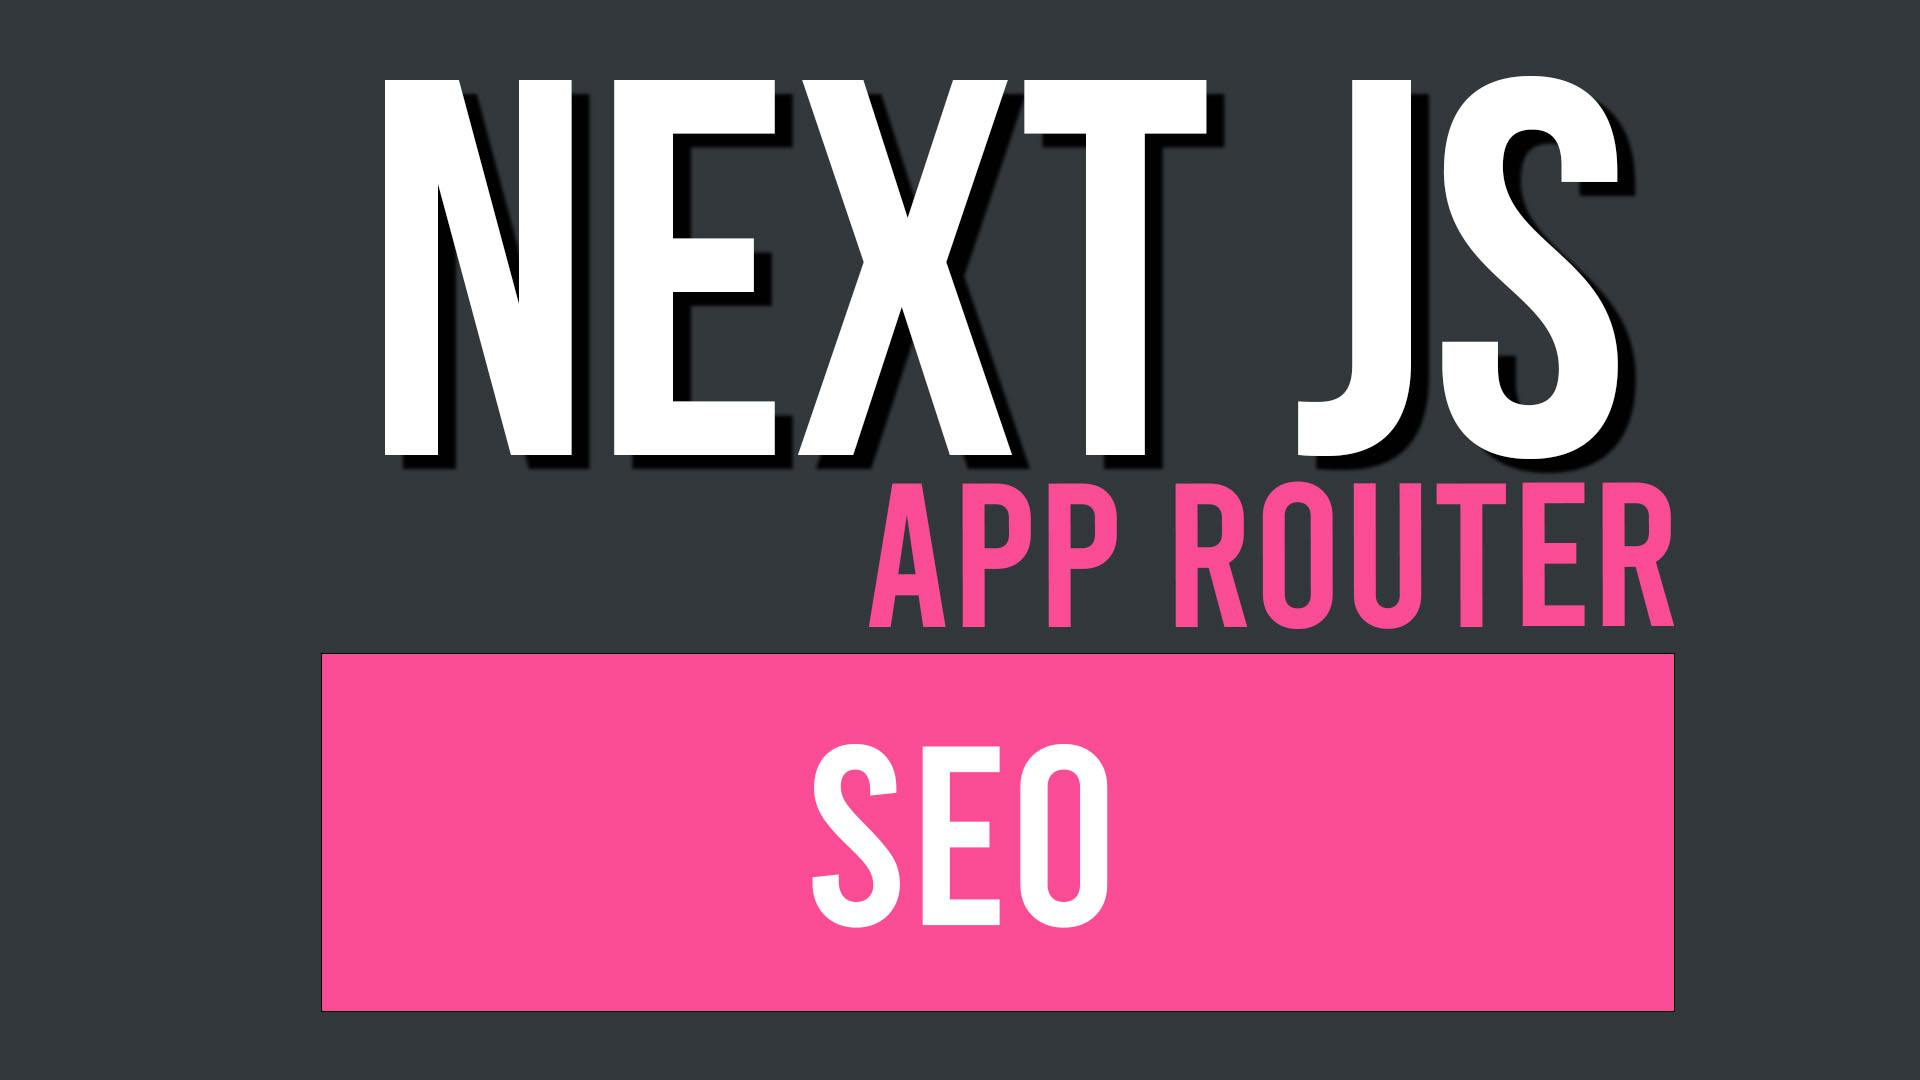 The NextJS app router SEO features: Metadata, sitemaps, robots.txt, structured data…